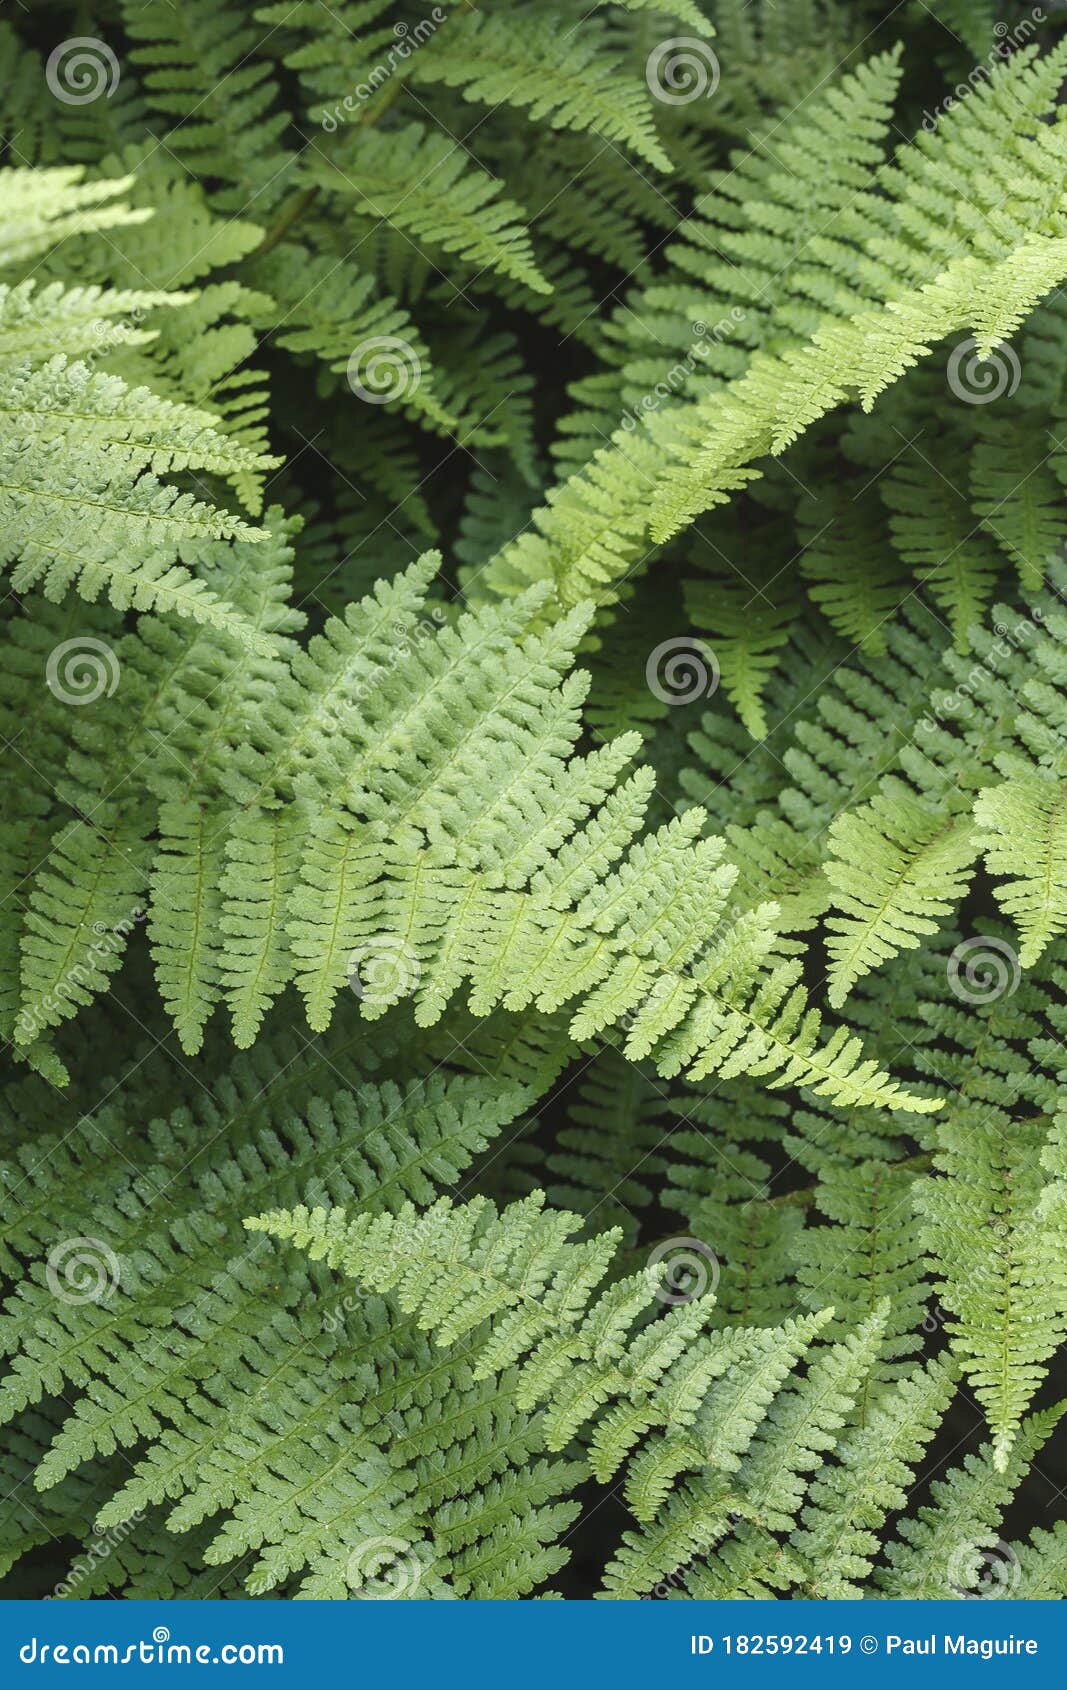 Ferns Leaf Detail In A Uk Garden Wood Fern Dryopteris Felix Mas Stock Image Image Of England Green 182592419